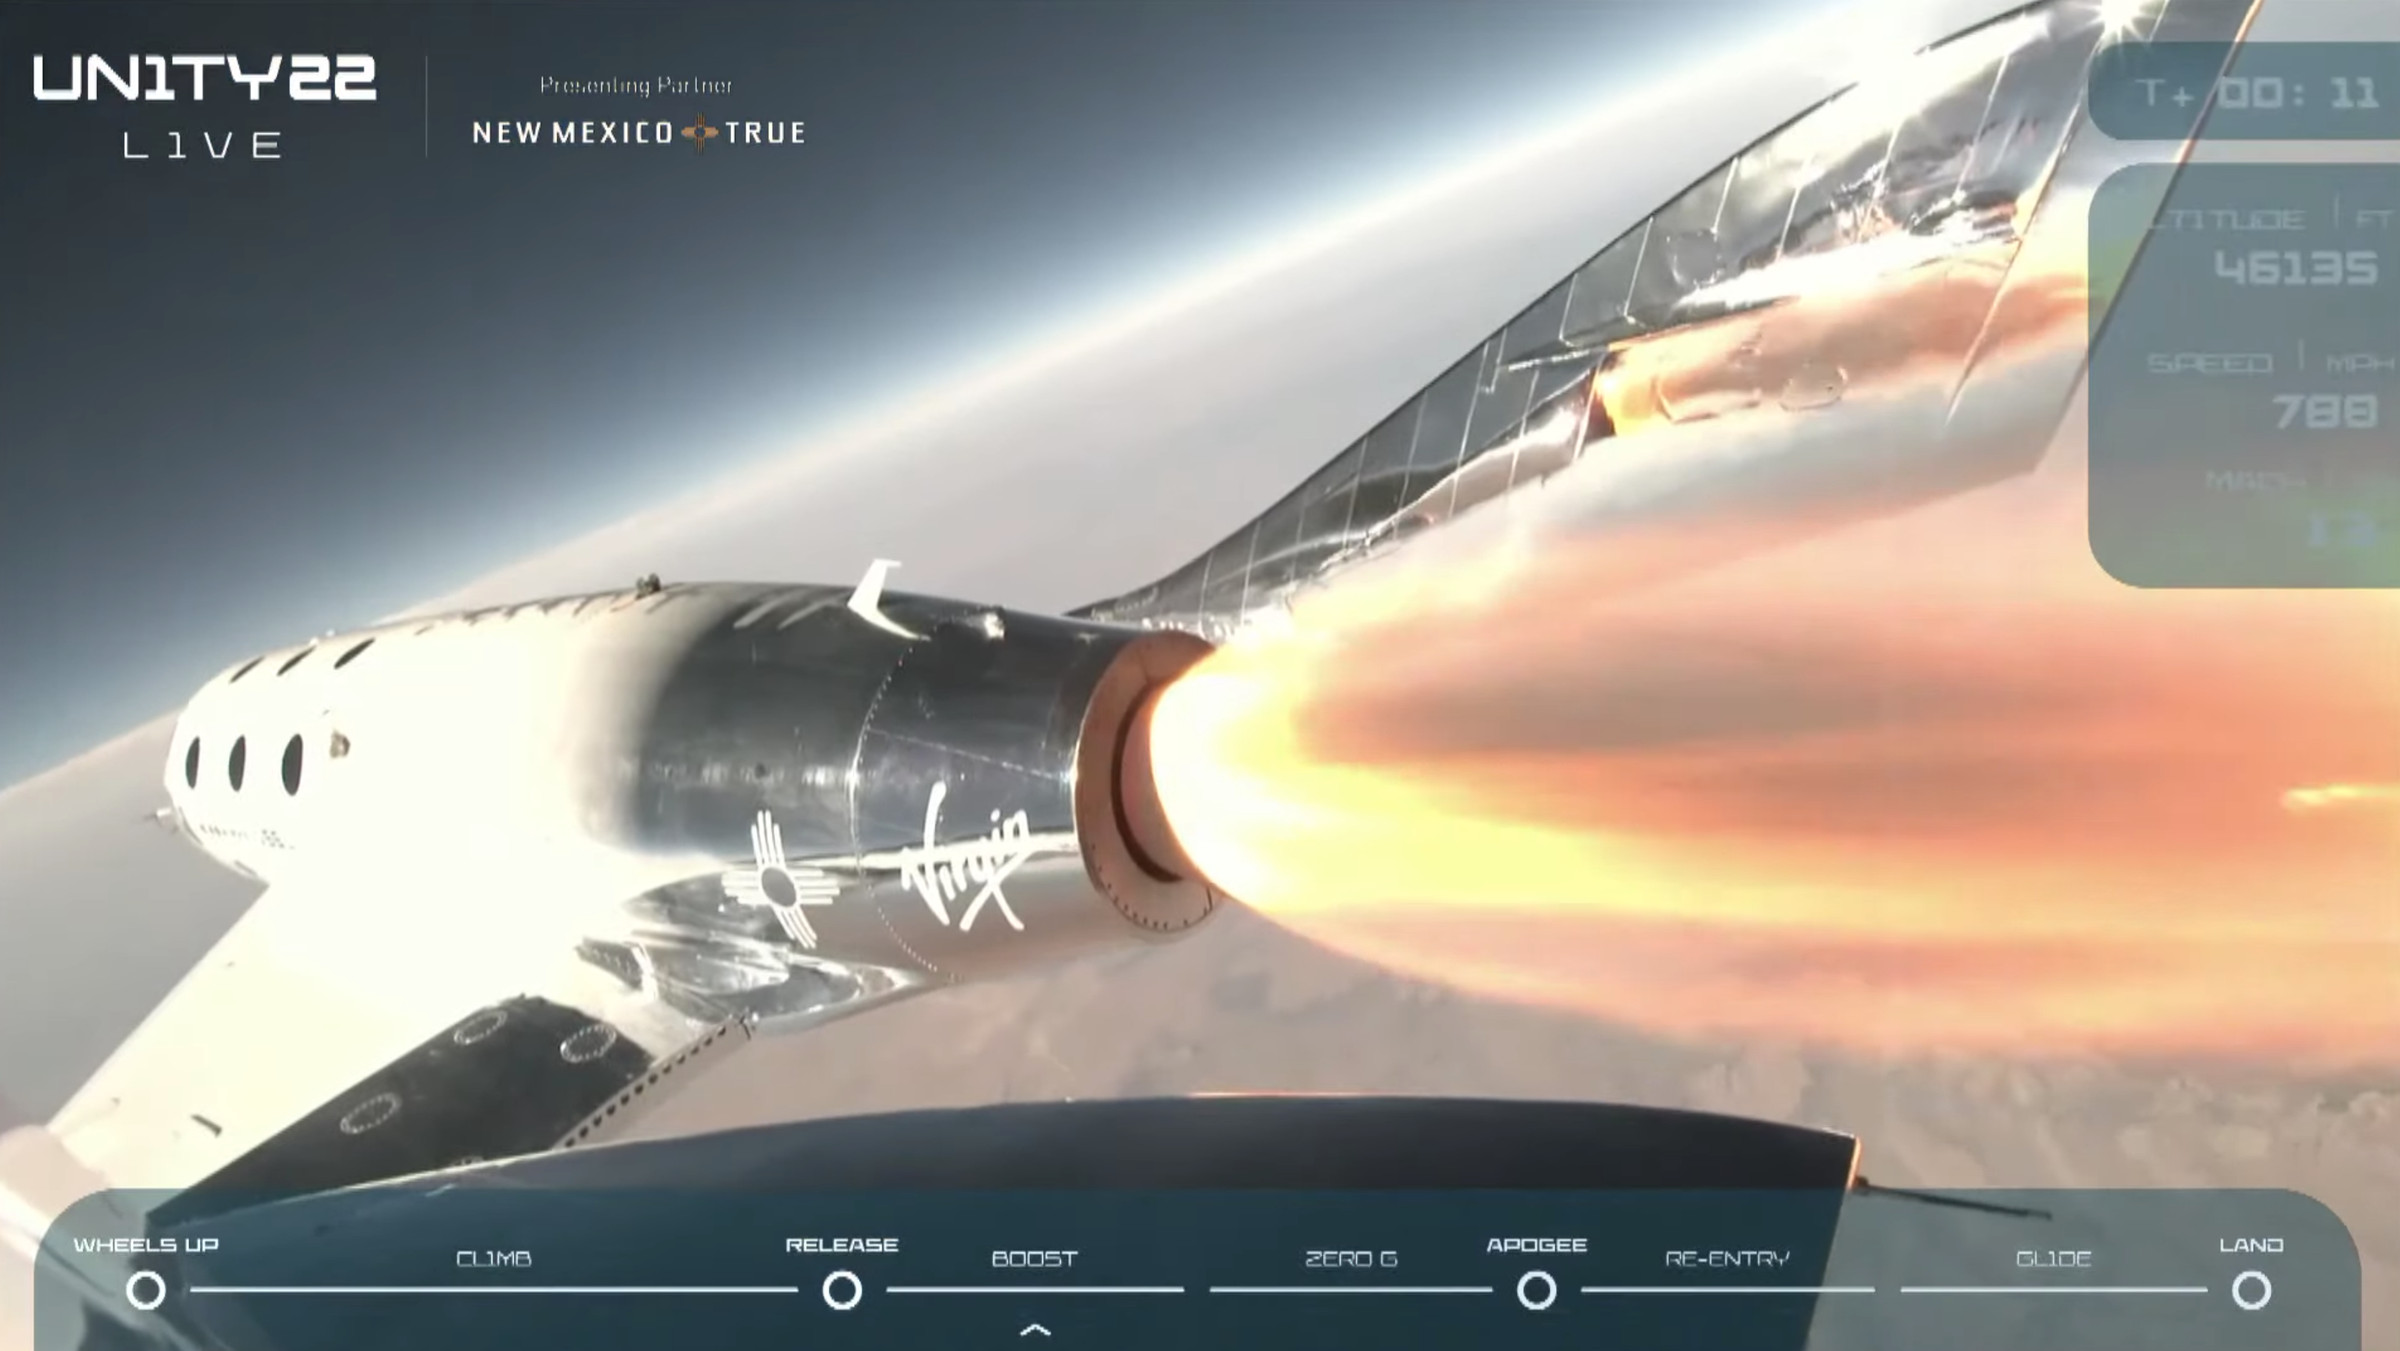 The SpaceShipTwo rocket ignites